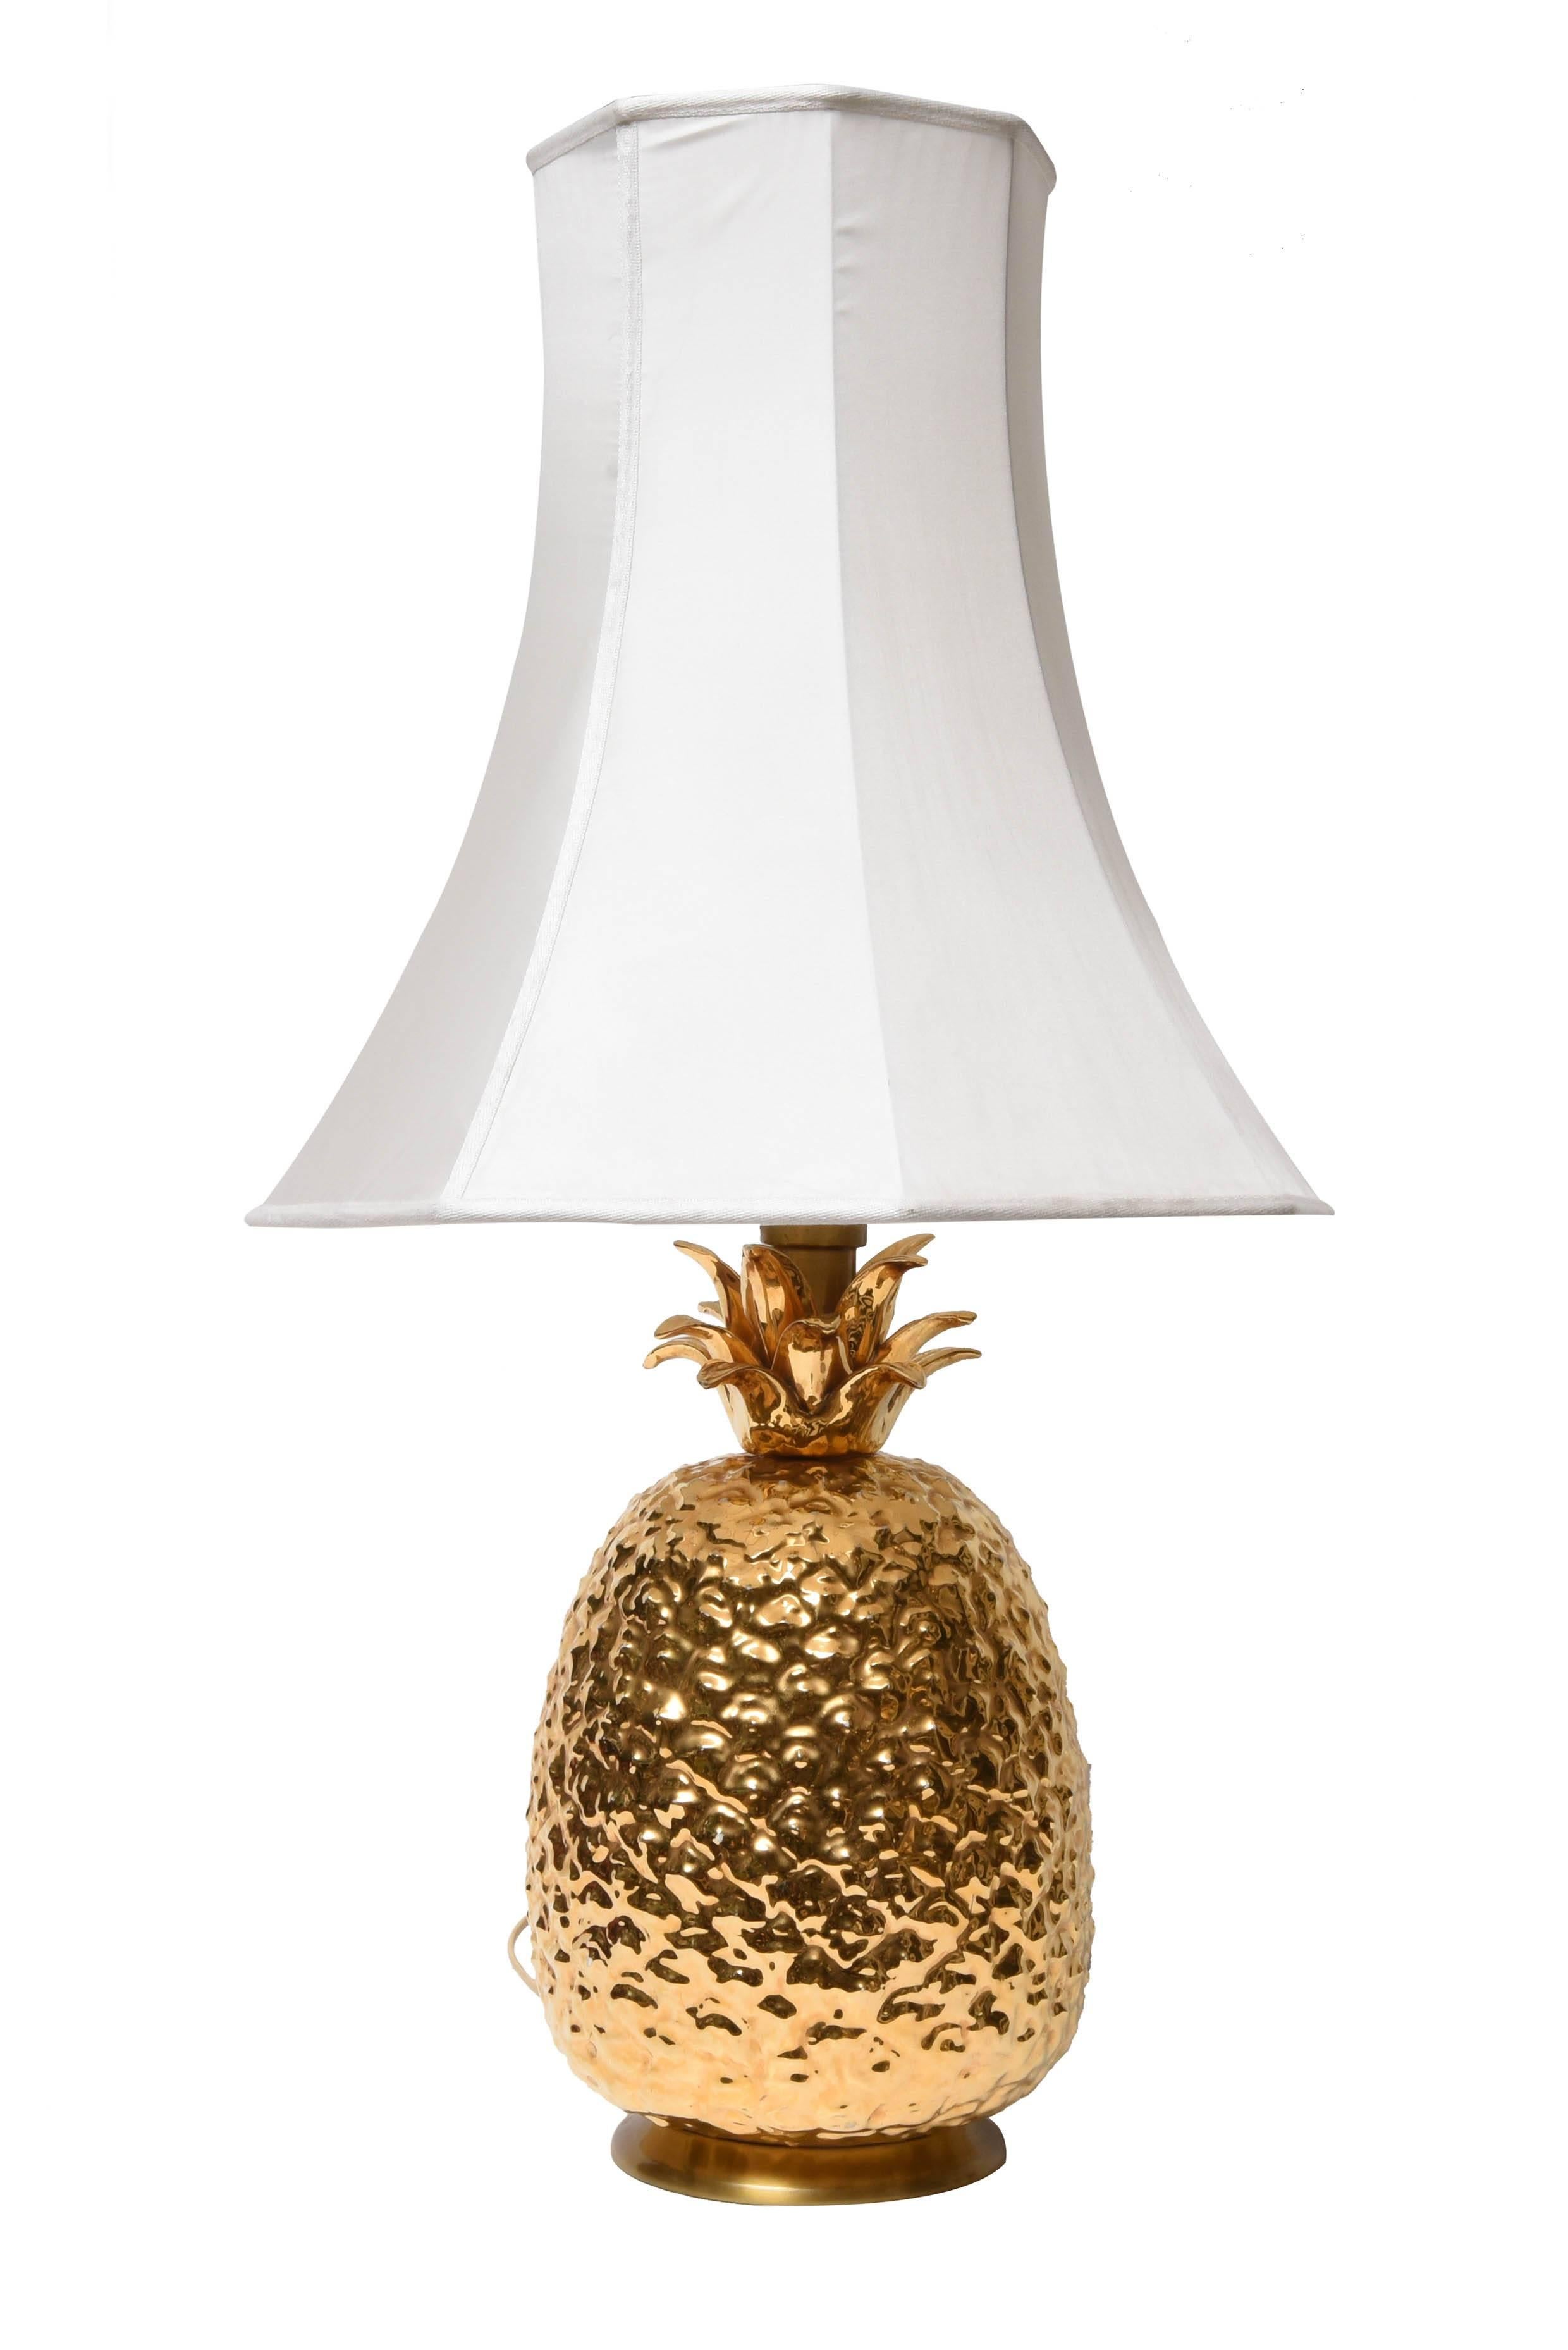 Gilded ceramic pineapple table lamp.